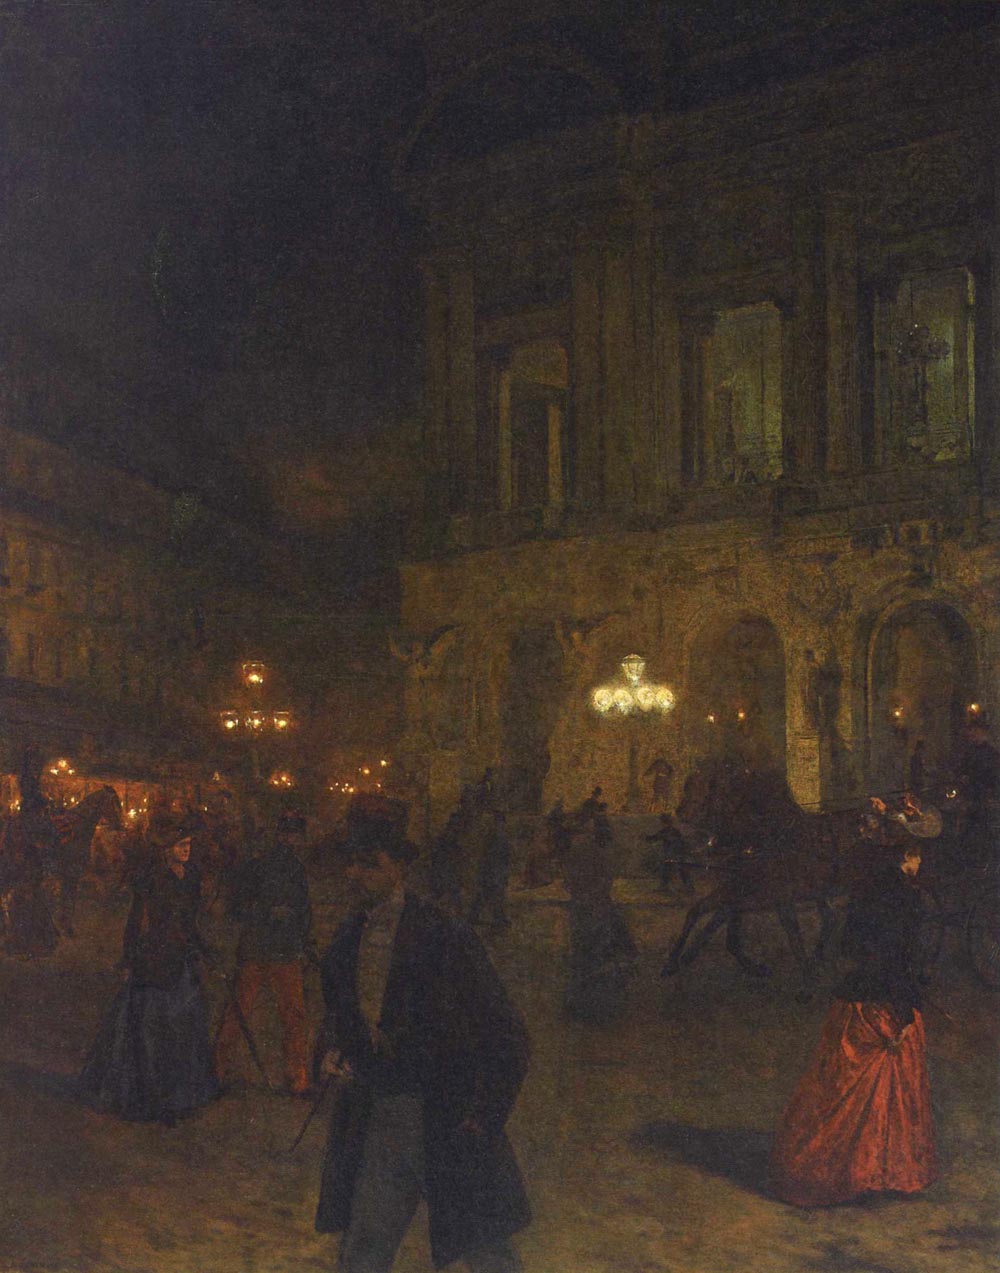 Parisian Opera House at Night